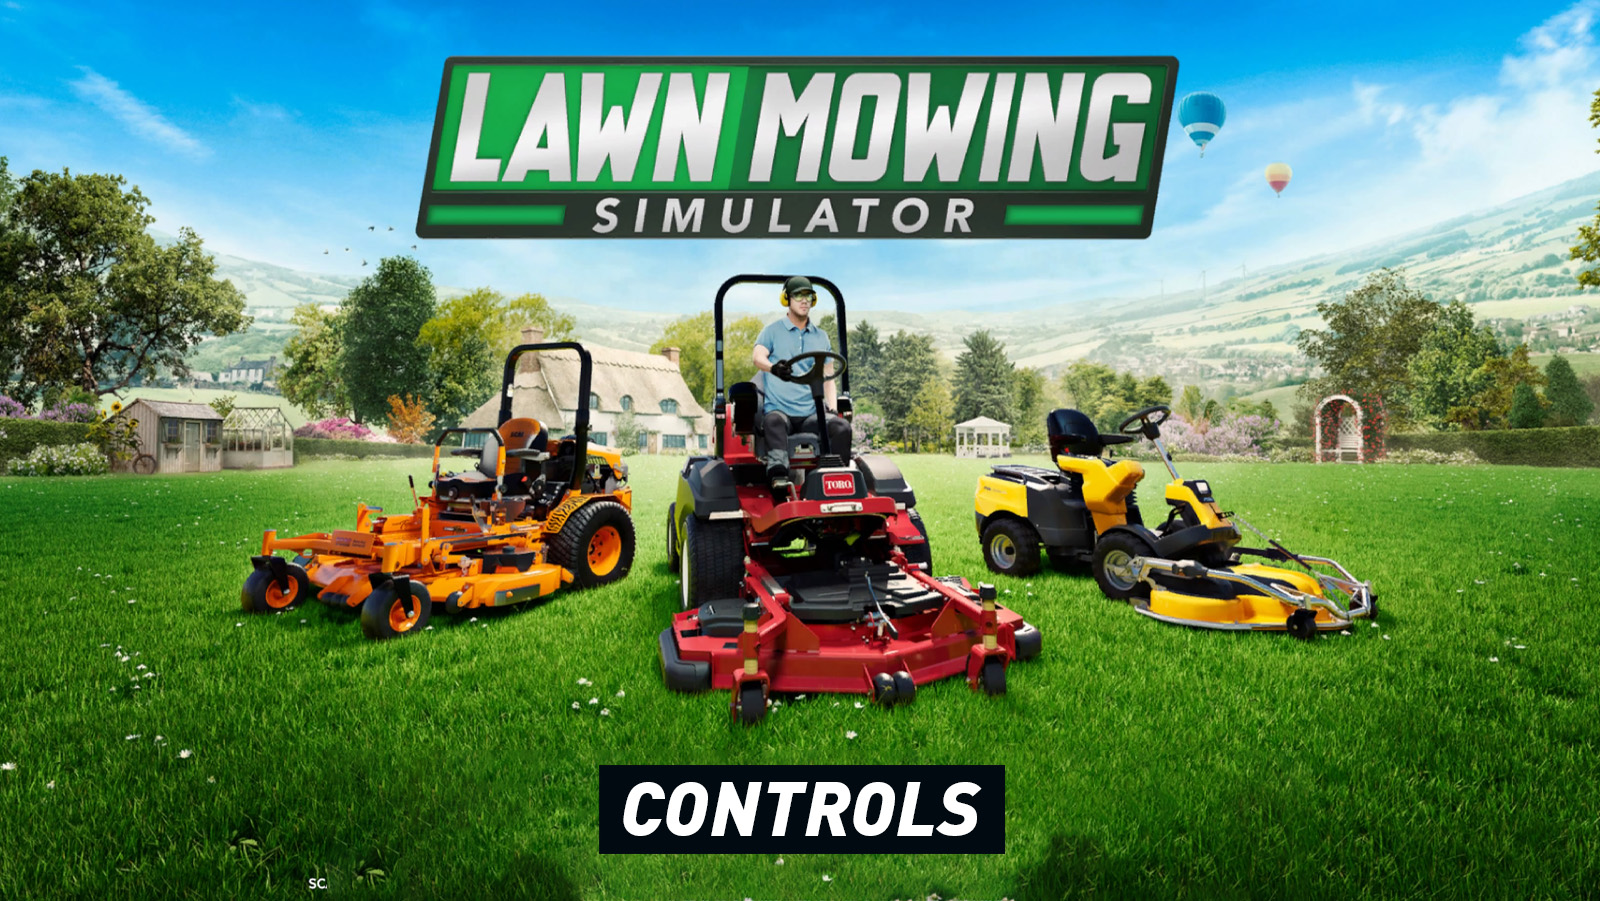 Lawn Mowing Simulator – Controls